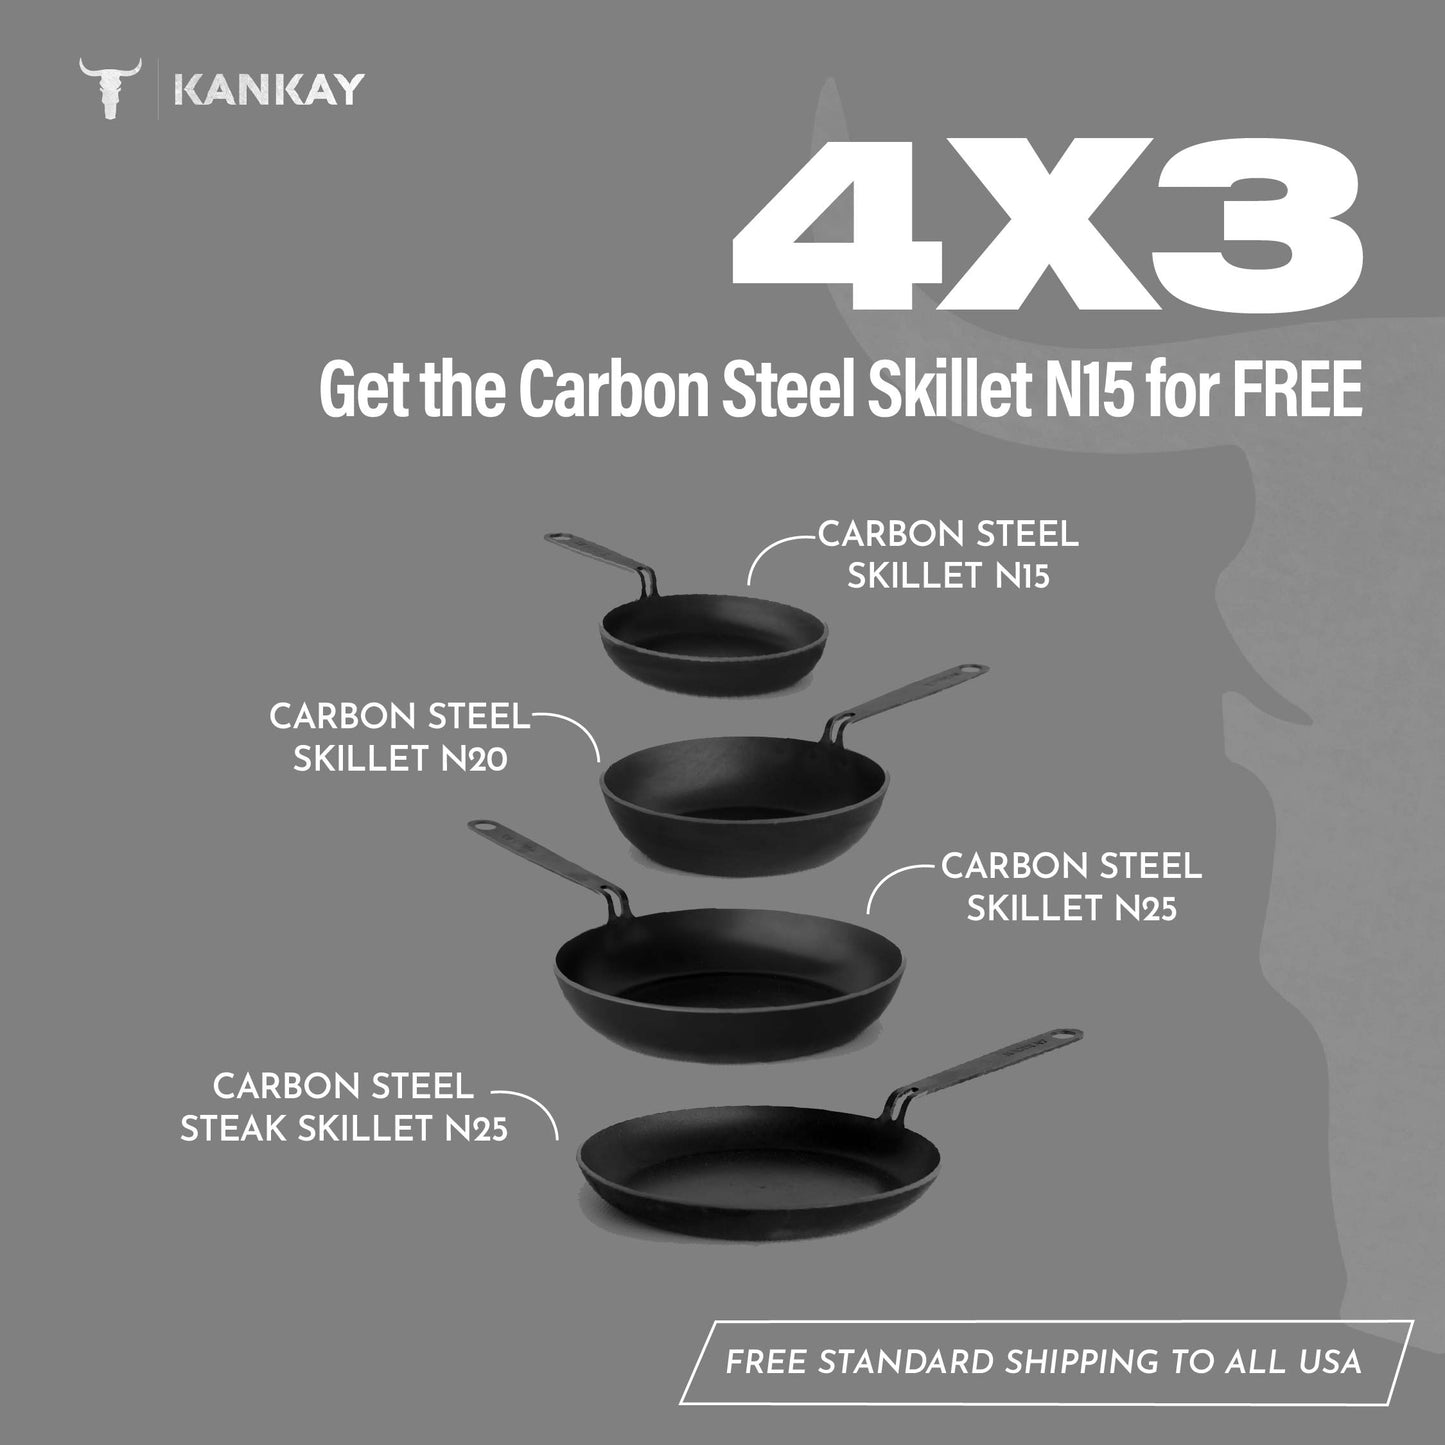 4x3 Carbon Steel Skillet - GET 1 FREE